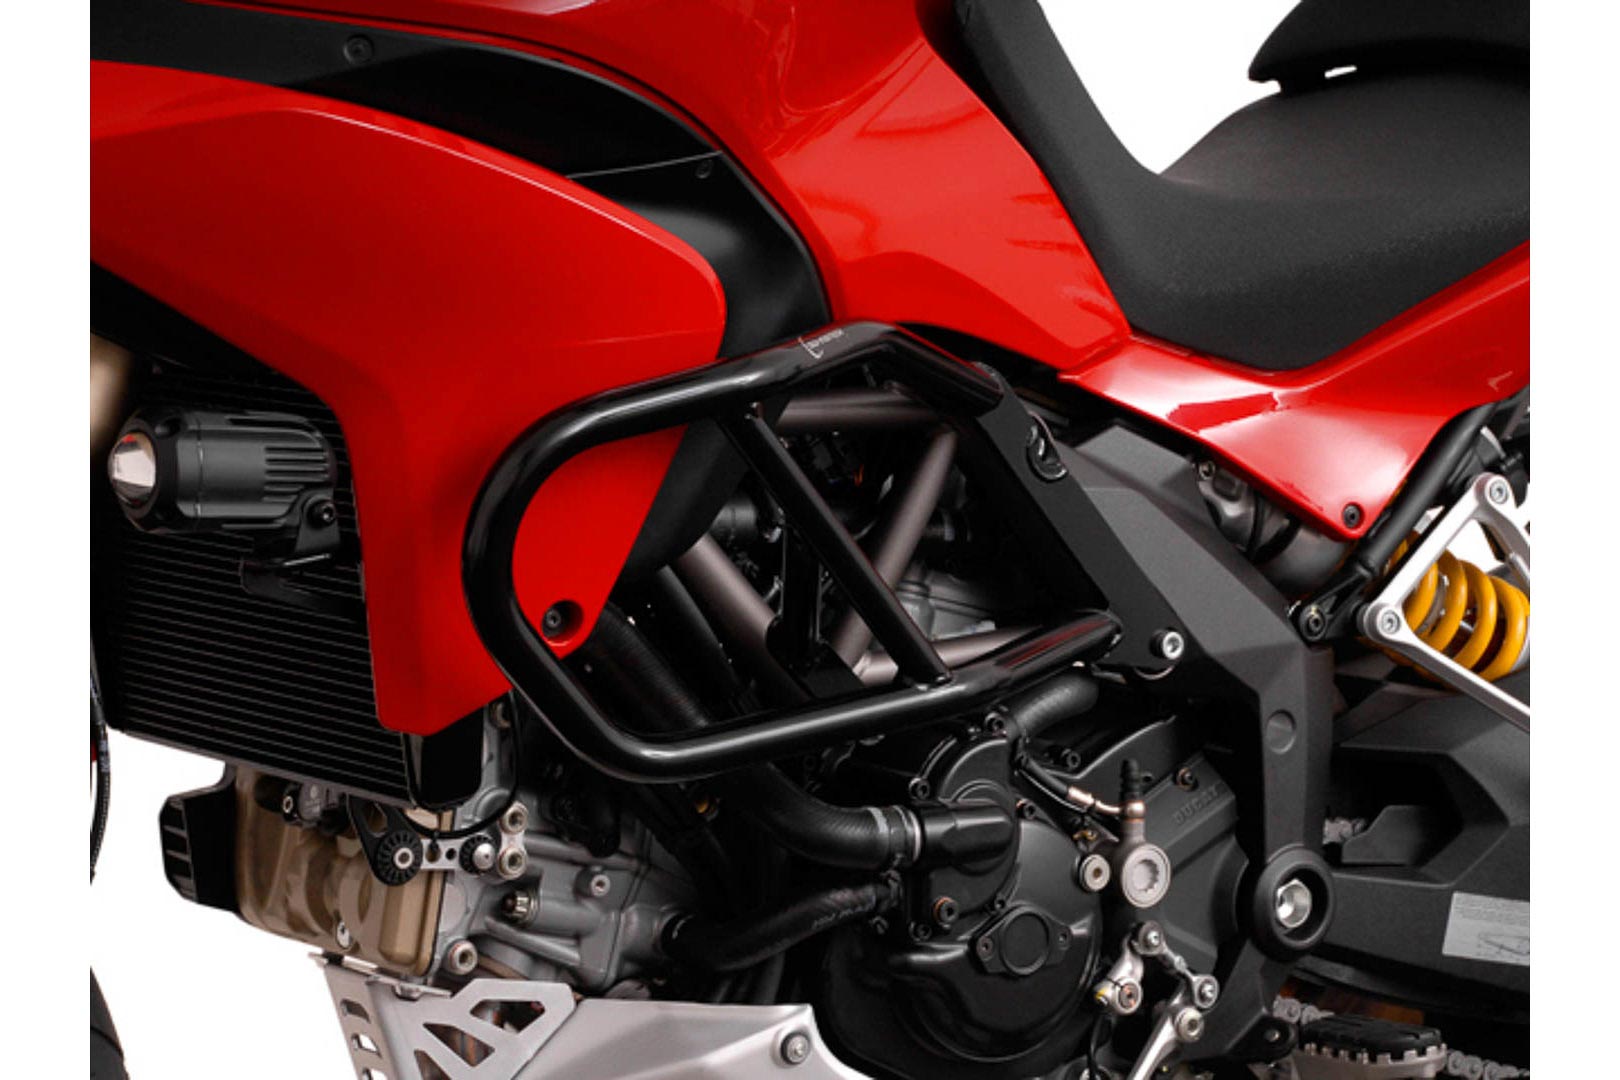 crash bar SW-MOTECH black for Ducati for Multistrada 1200/ S year 2010-2014